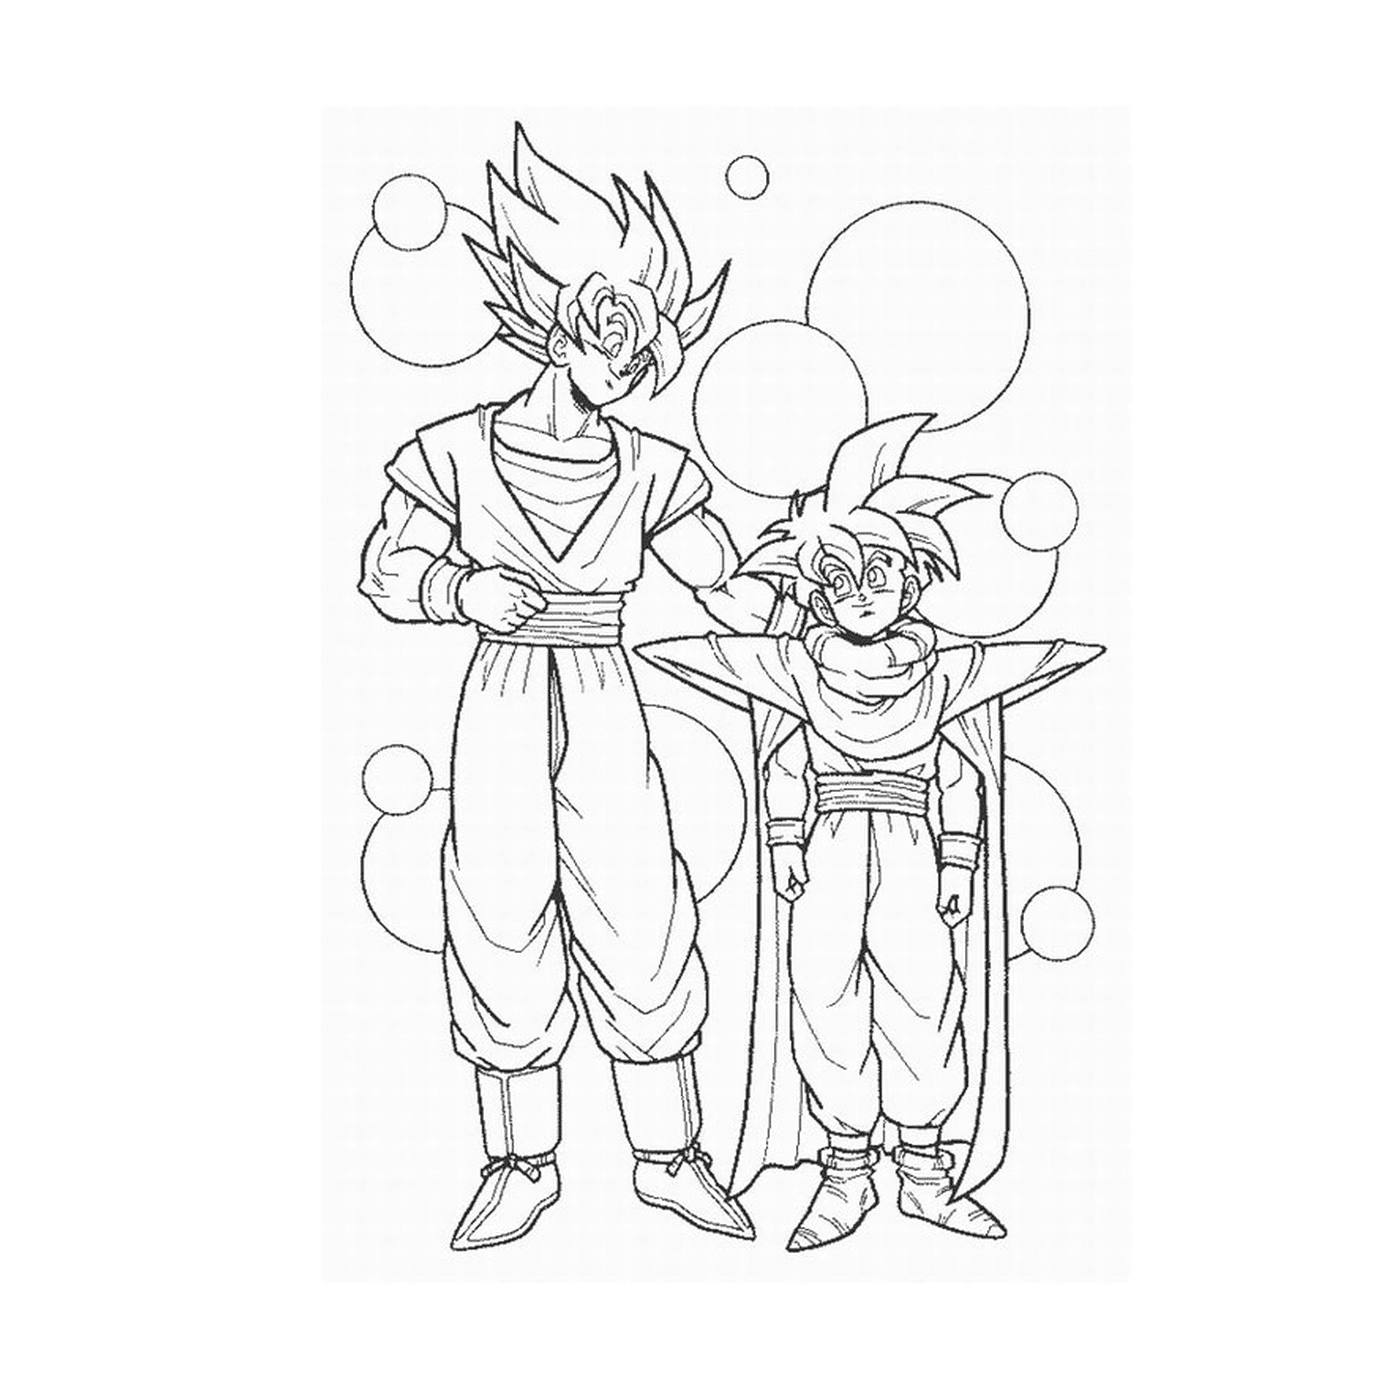  Goku y Vegeta, poderosos guerreros 